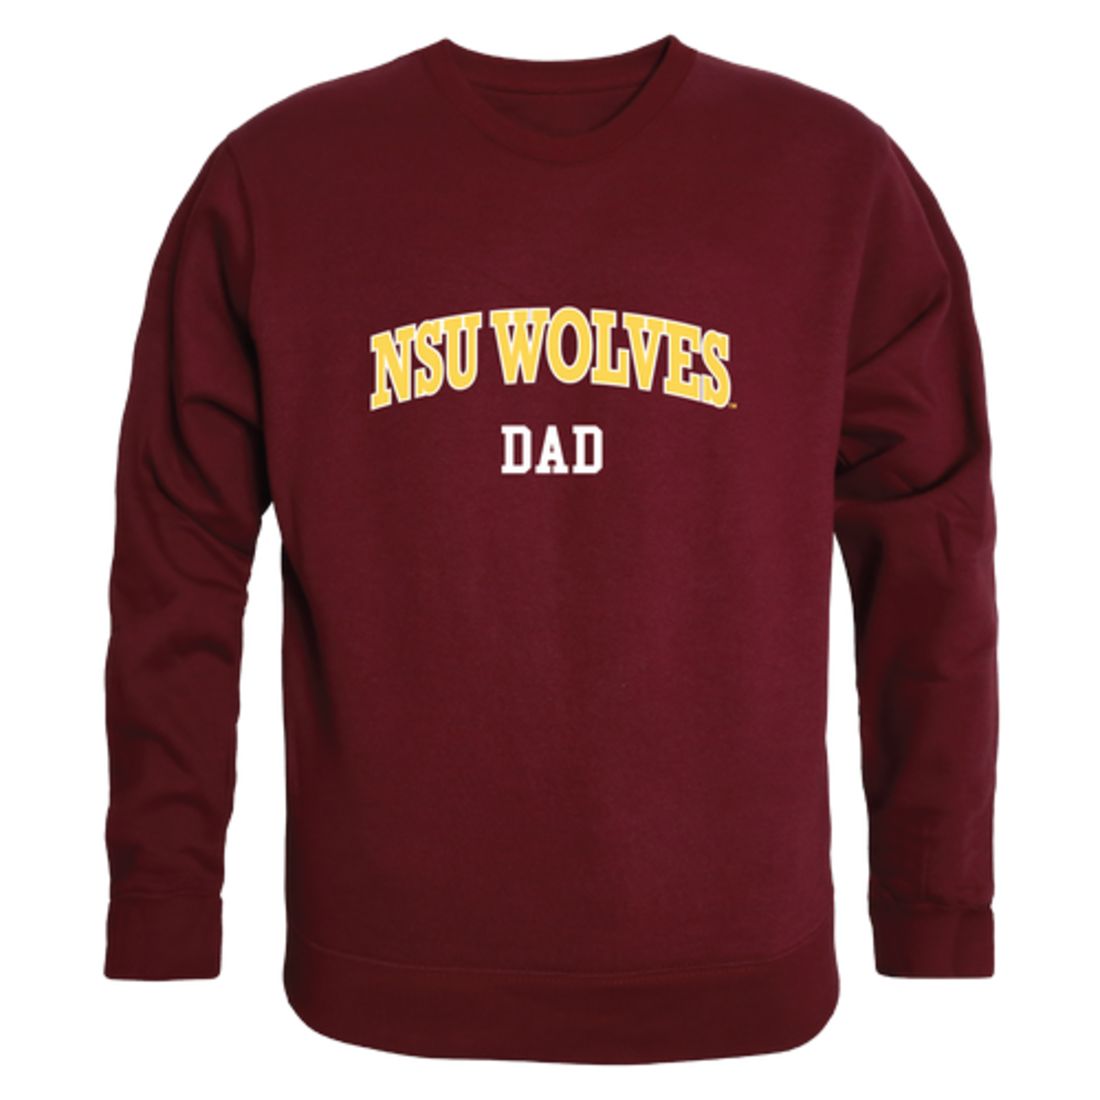 NSU Northern State University Wolves Dad Fleece Crewneck Pullover Sweatshirt Heather Grey-Campus-Wardrobe